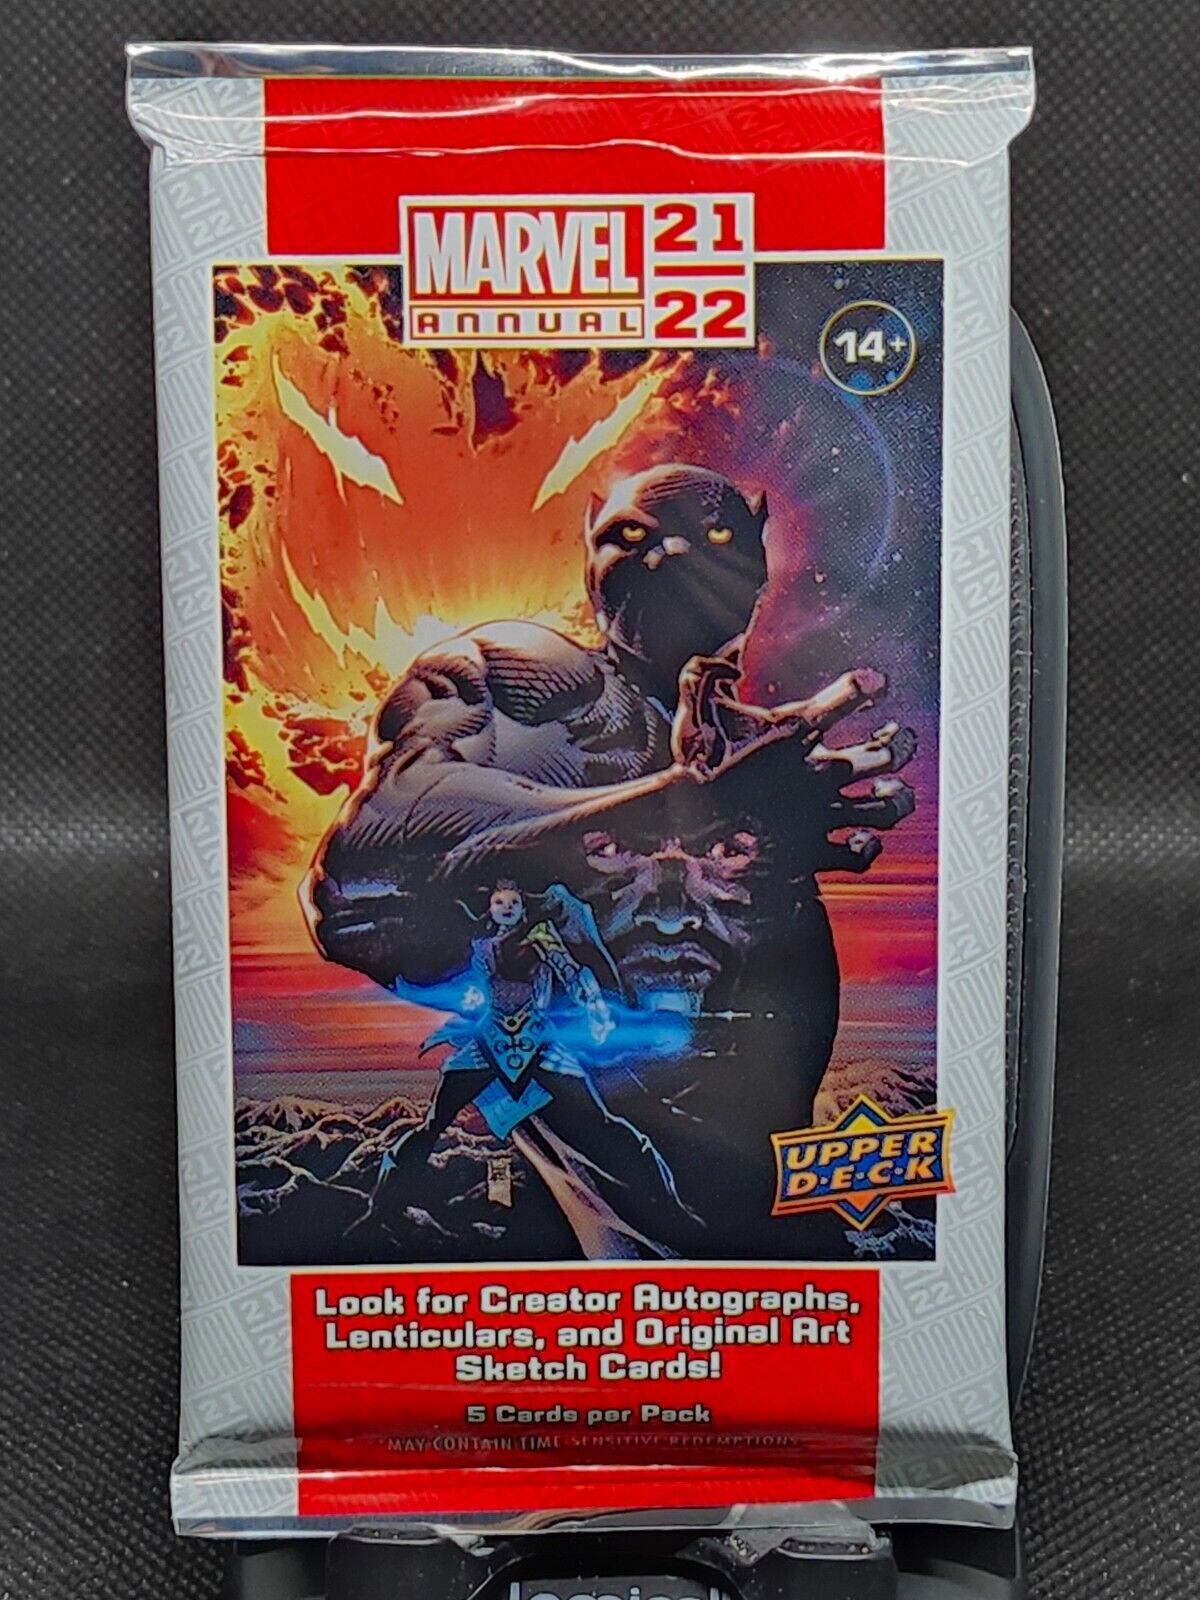 2021-22 Marvel Annual Factory Sealed Blaster Pack